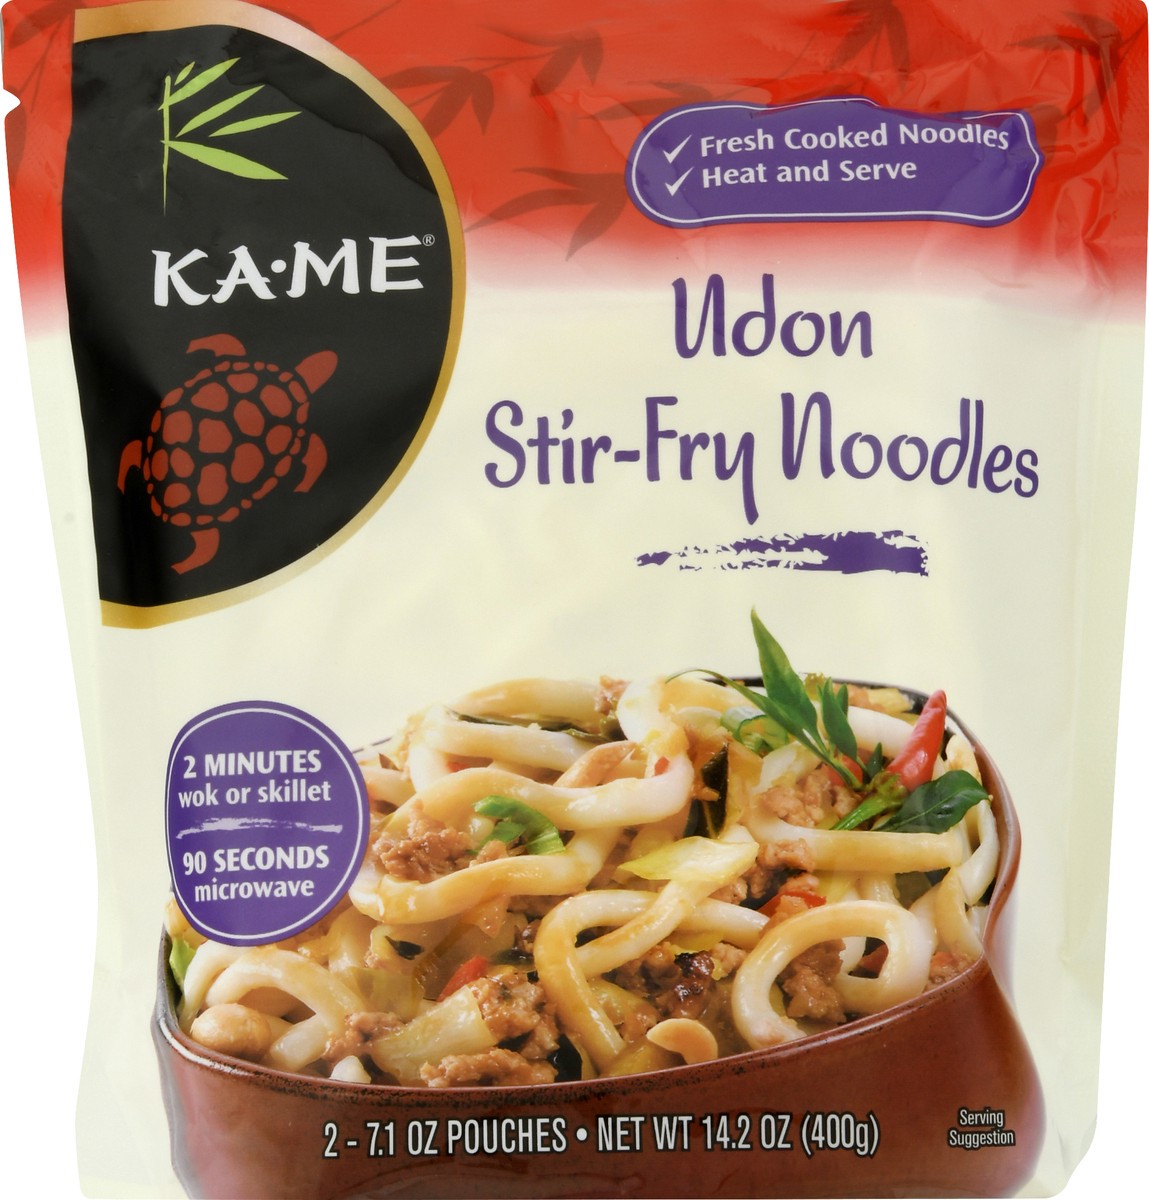 slide 5 of 13, KA-ME Udon Stir-Fry Noodles 2 - 7.1 oz Pouches, 14.2 oz